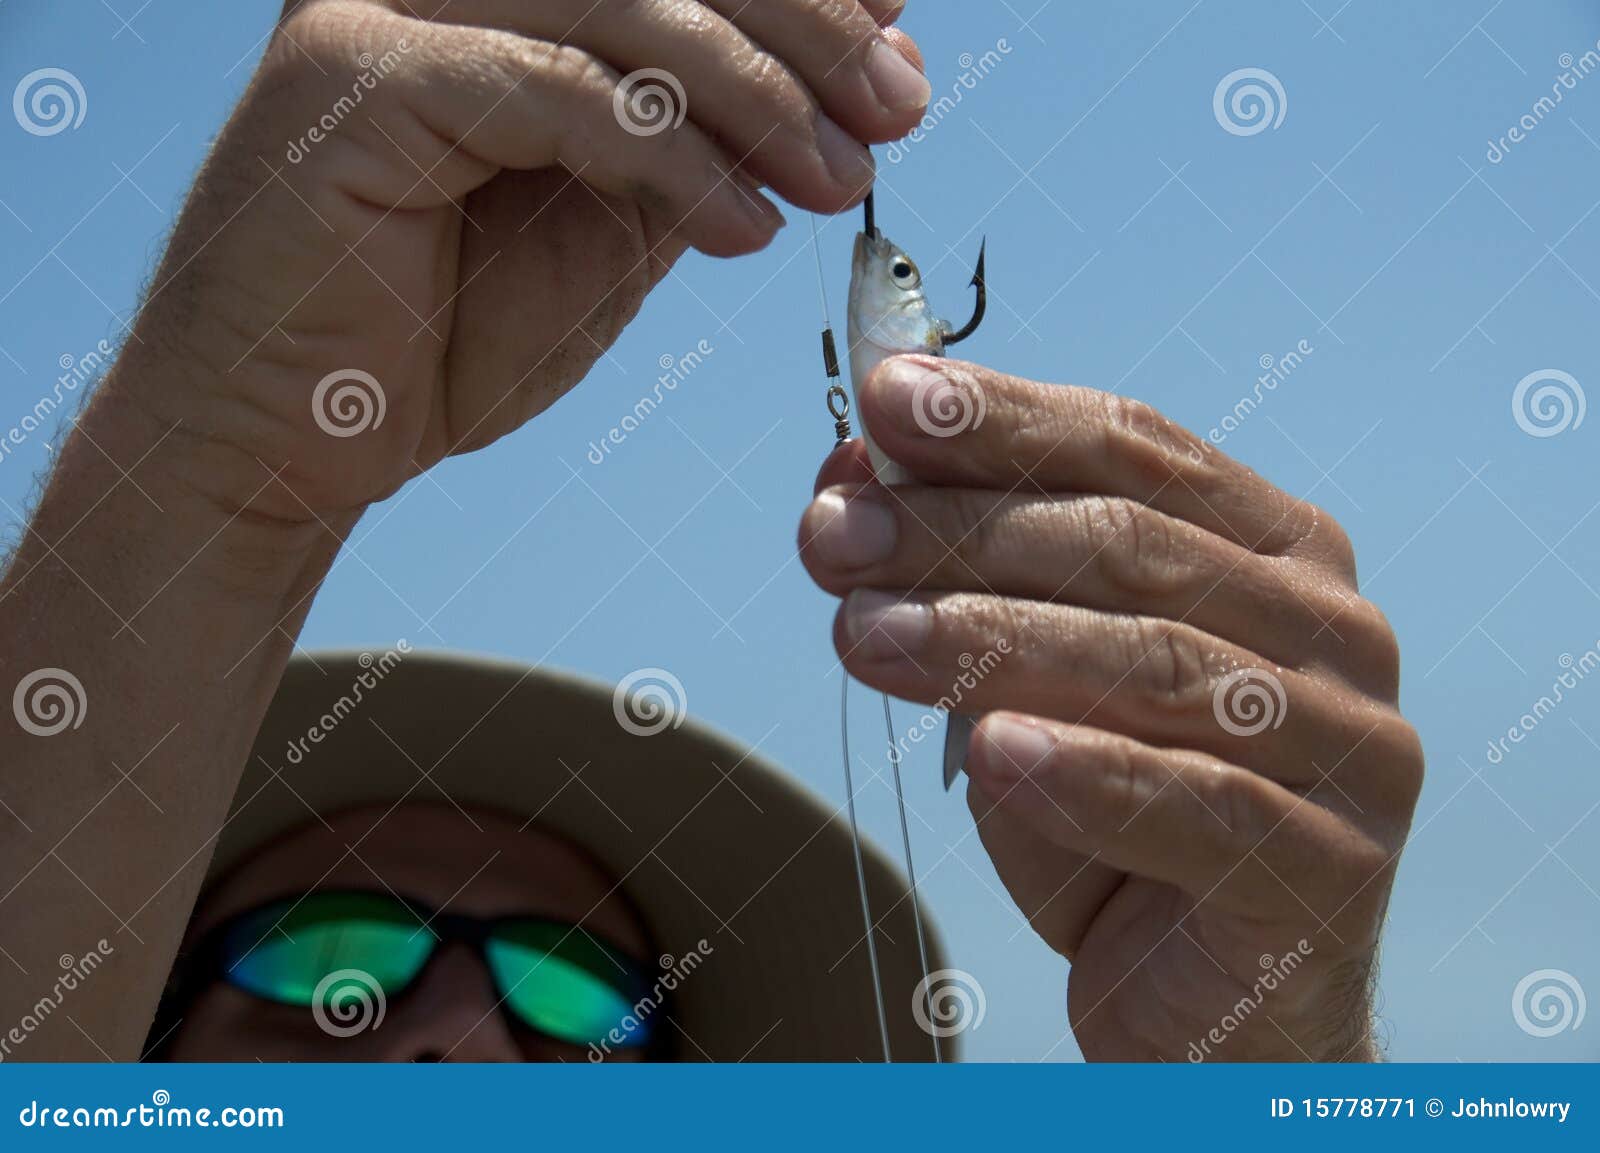 Baiting the hook stock image. Image of hooking, baiting - 15778771